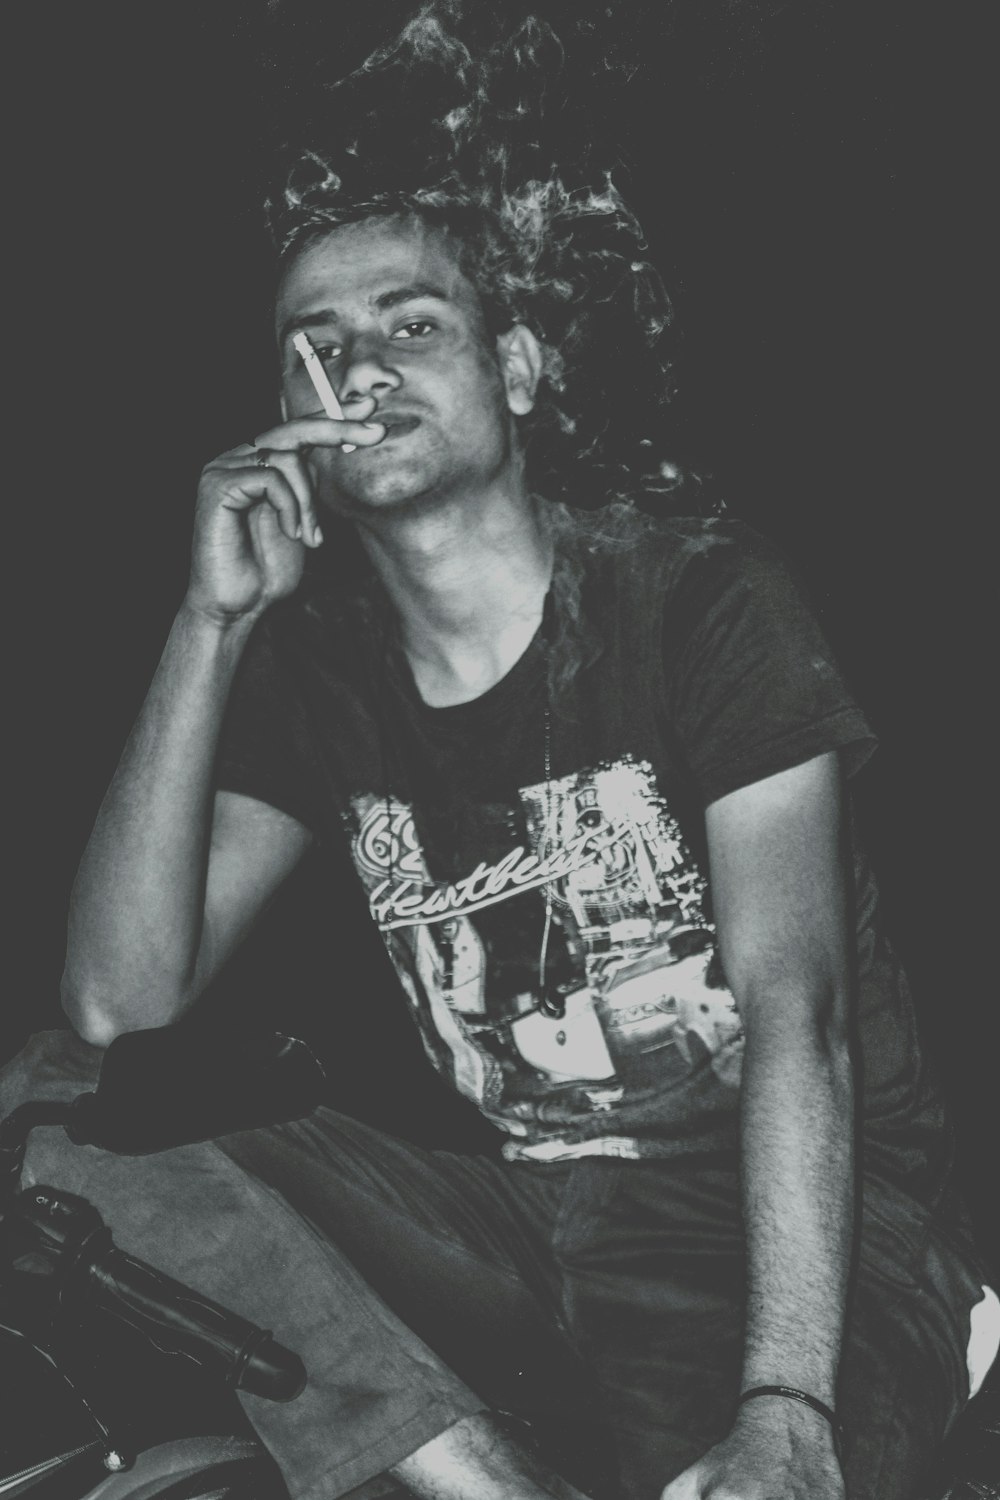 man in black crew neck t-shirt smoking cigarette